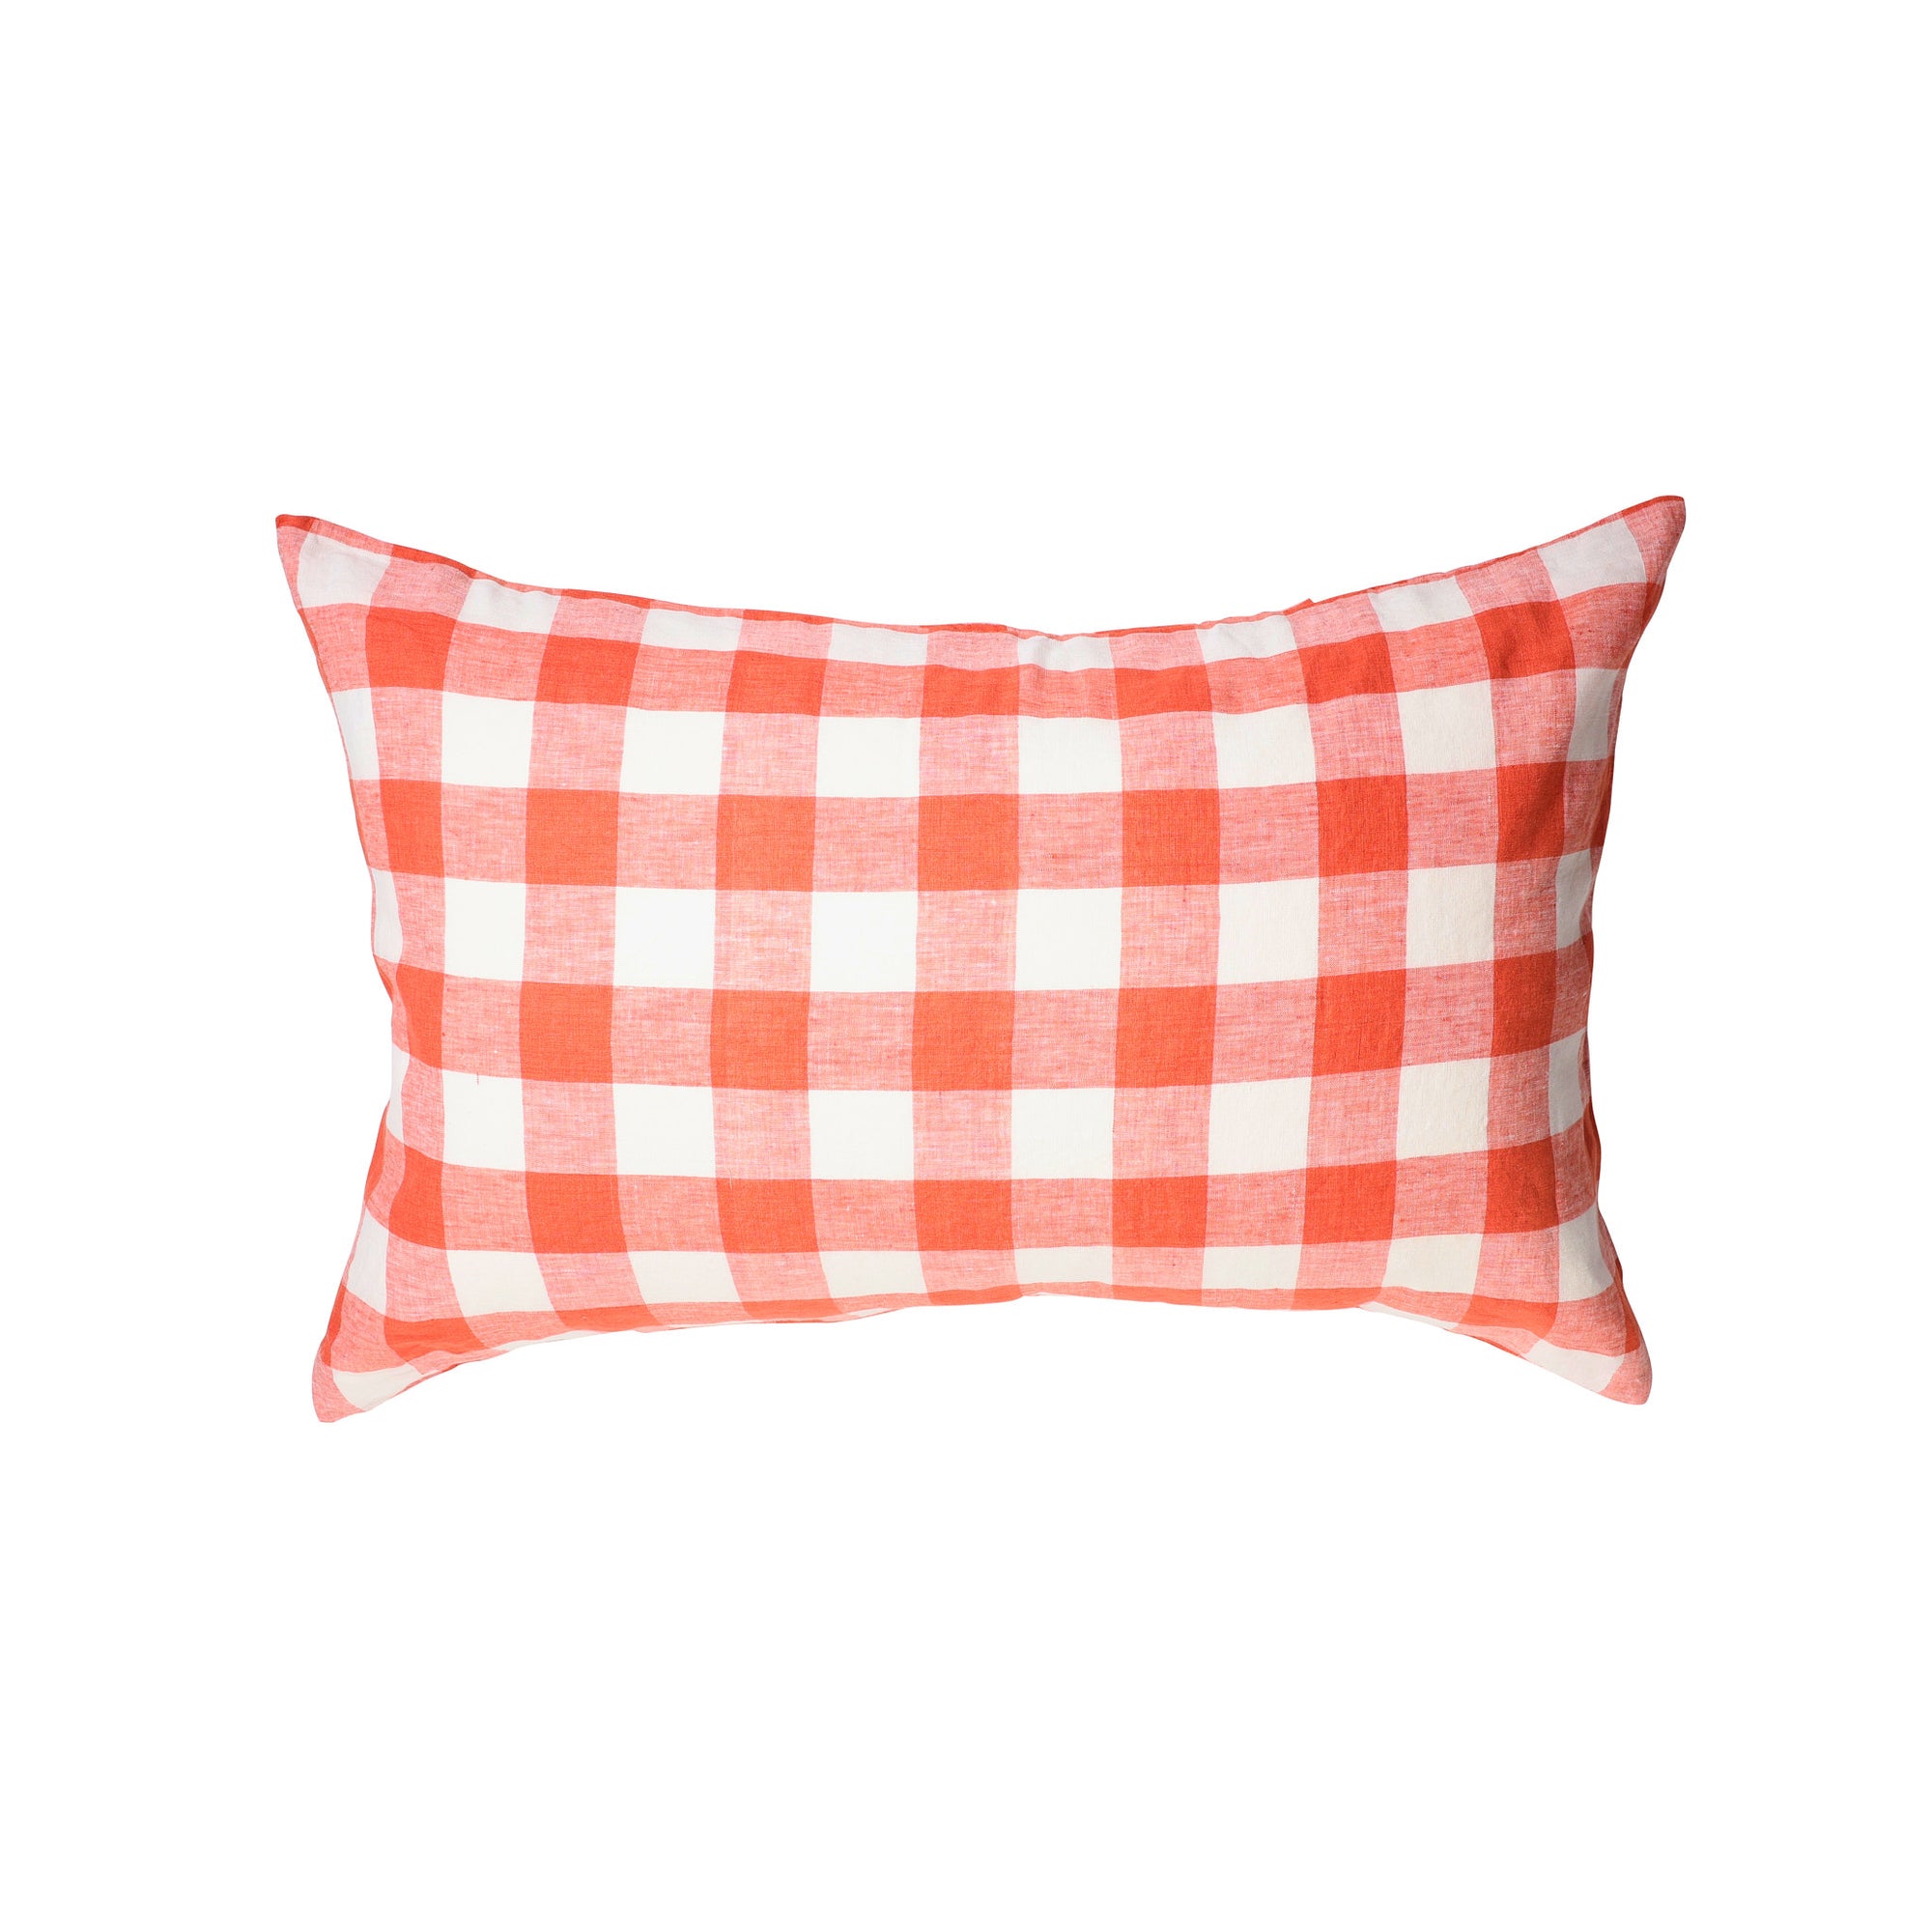 Pillowcase Sets - Cherry Gingham